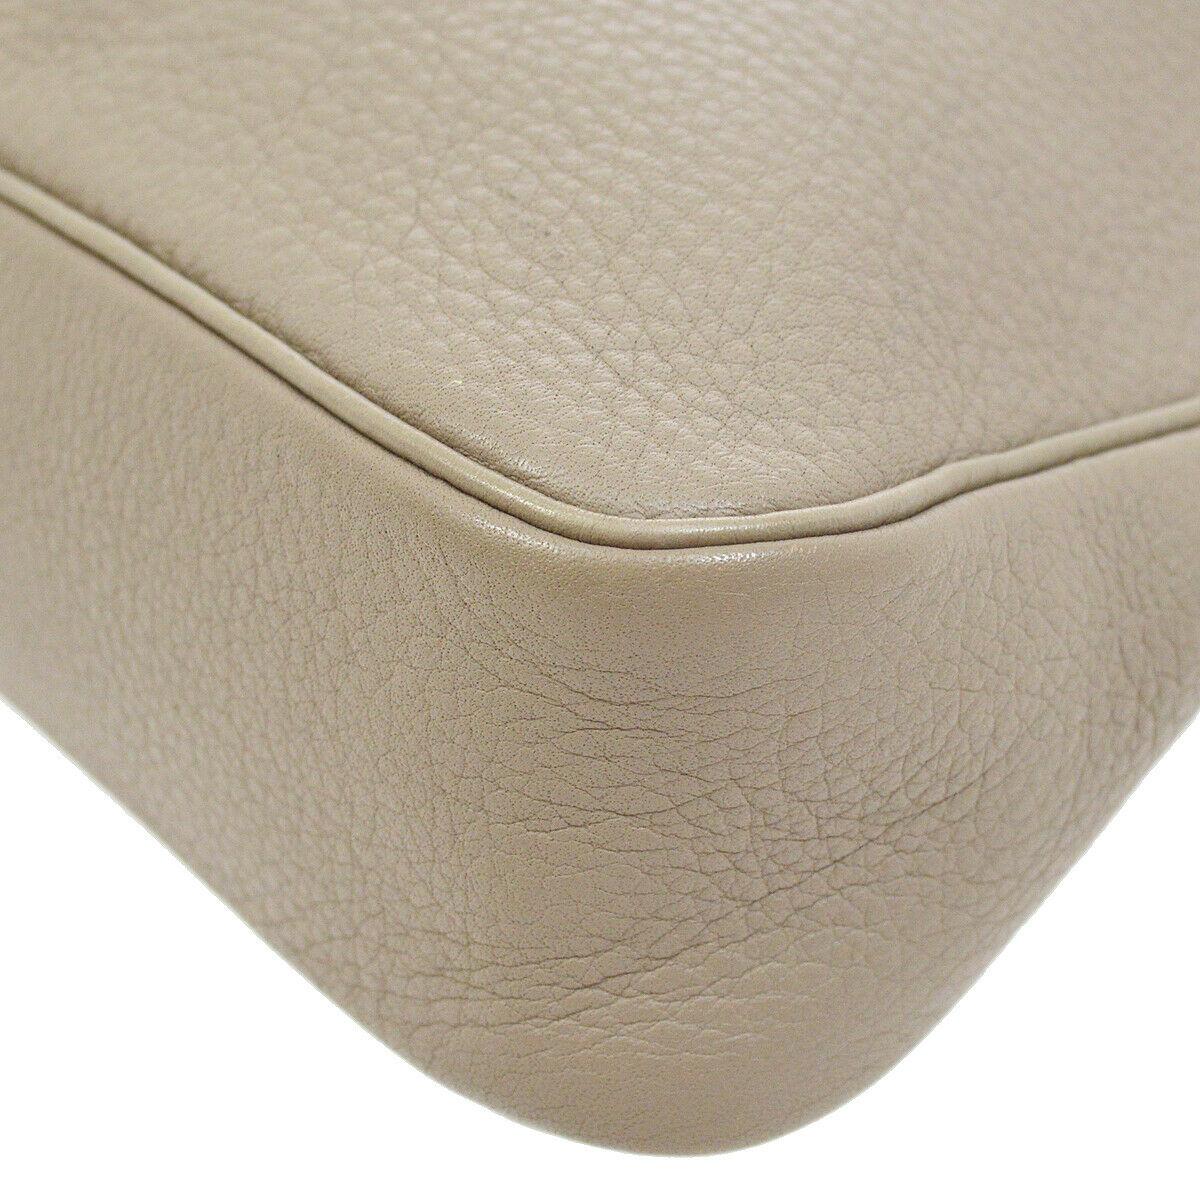 Brown Hermes Gray Leather Silver Buckle Large Hobo Carryall Shoulder Bag 